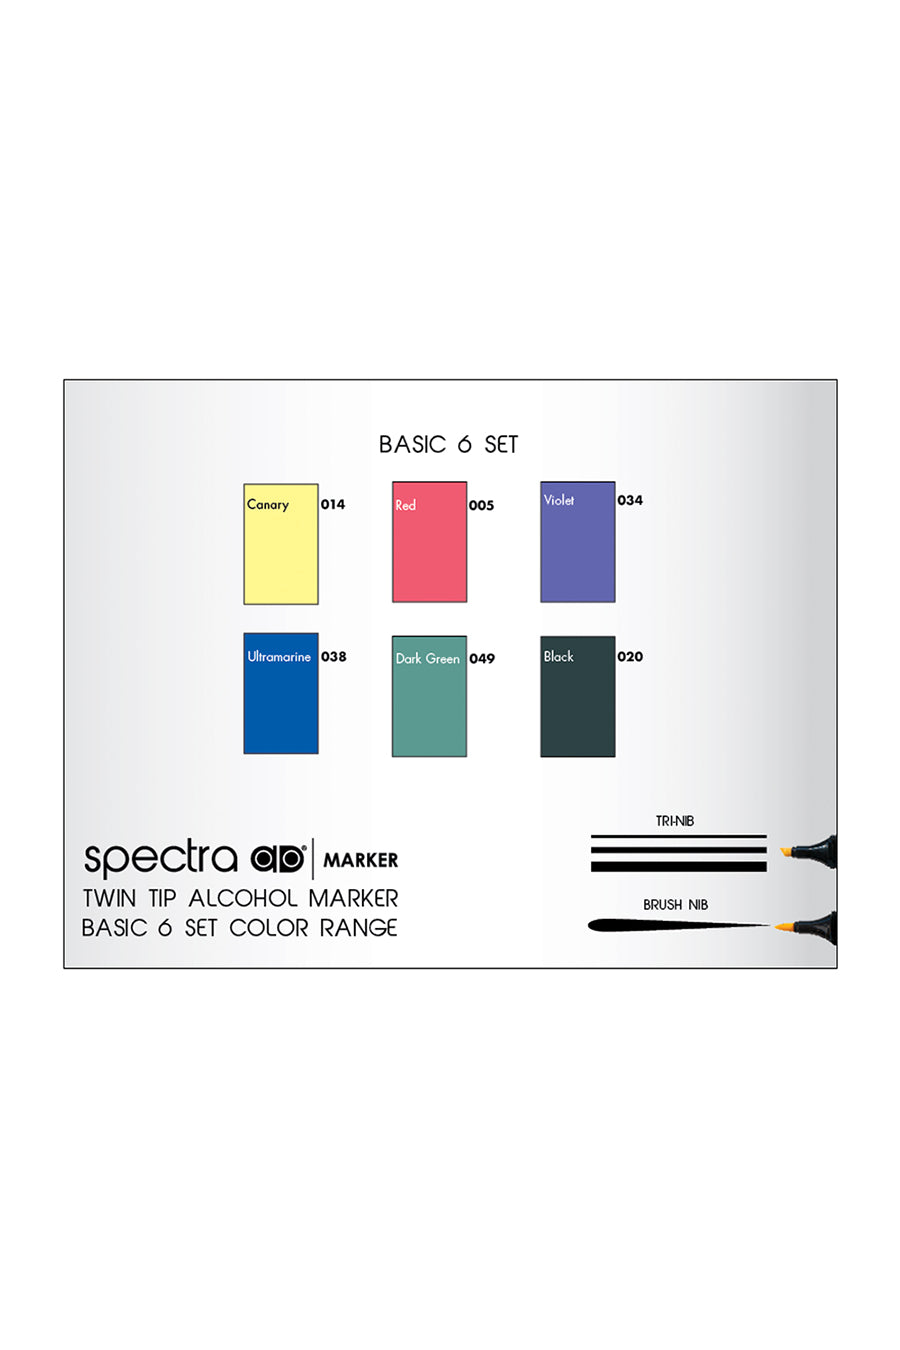 Chartpak, SBASIC6AD Spectra Ad Markers 6 PC Basic Set